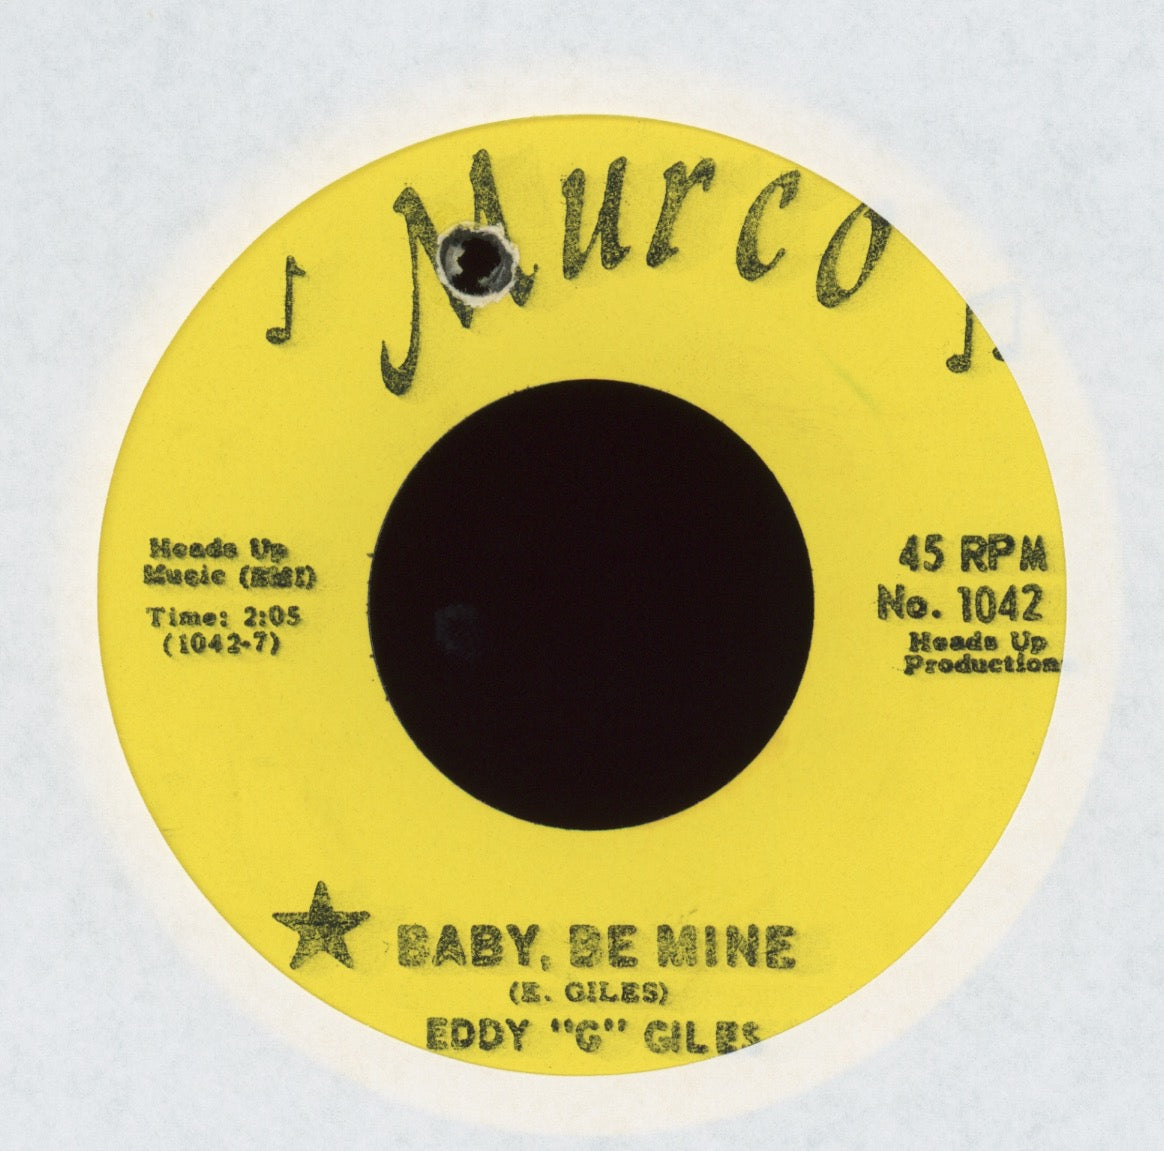 Eddie Giles - Baby Be Mine on Murco